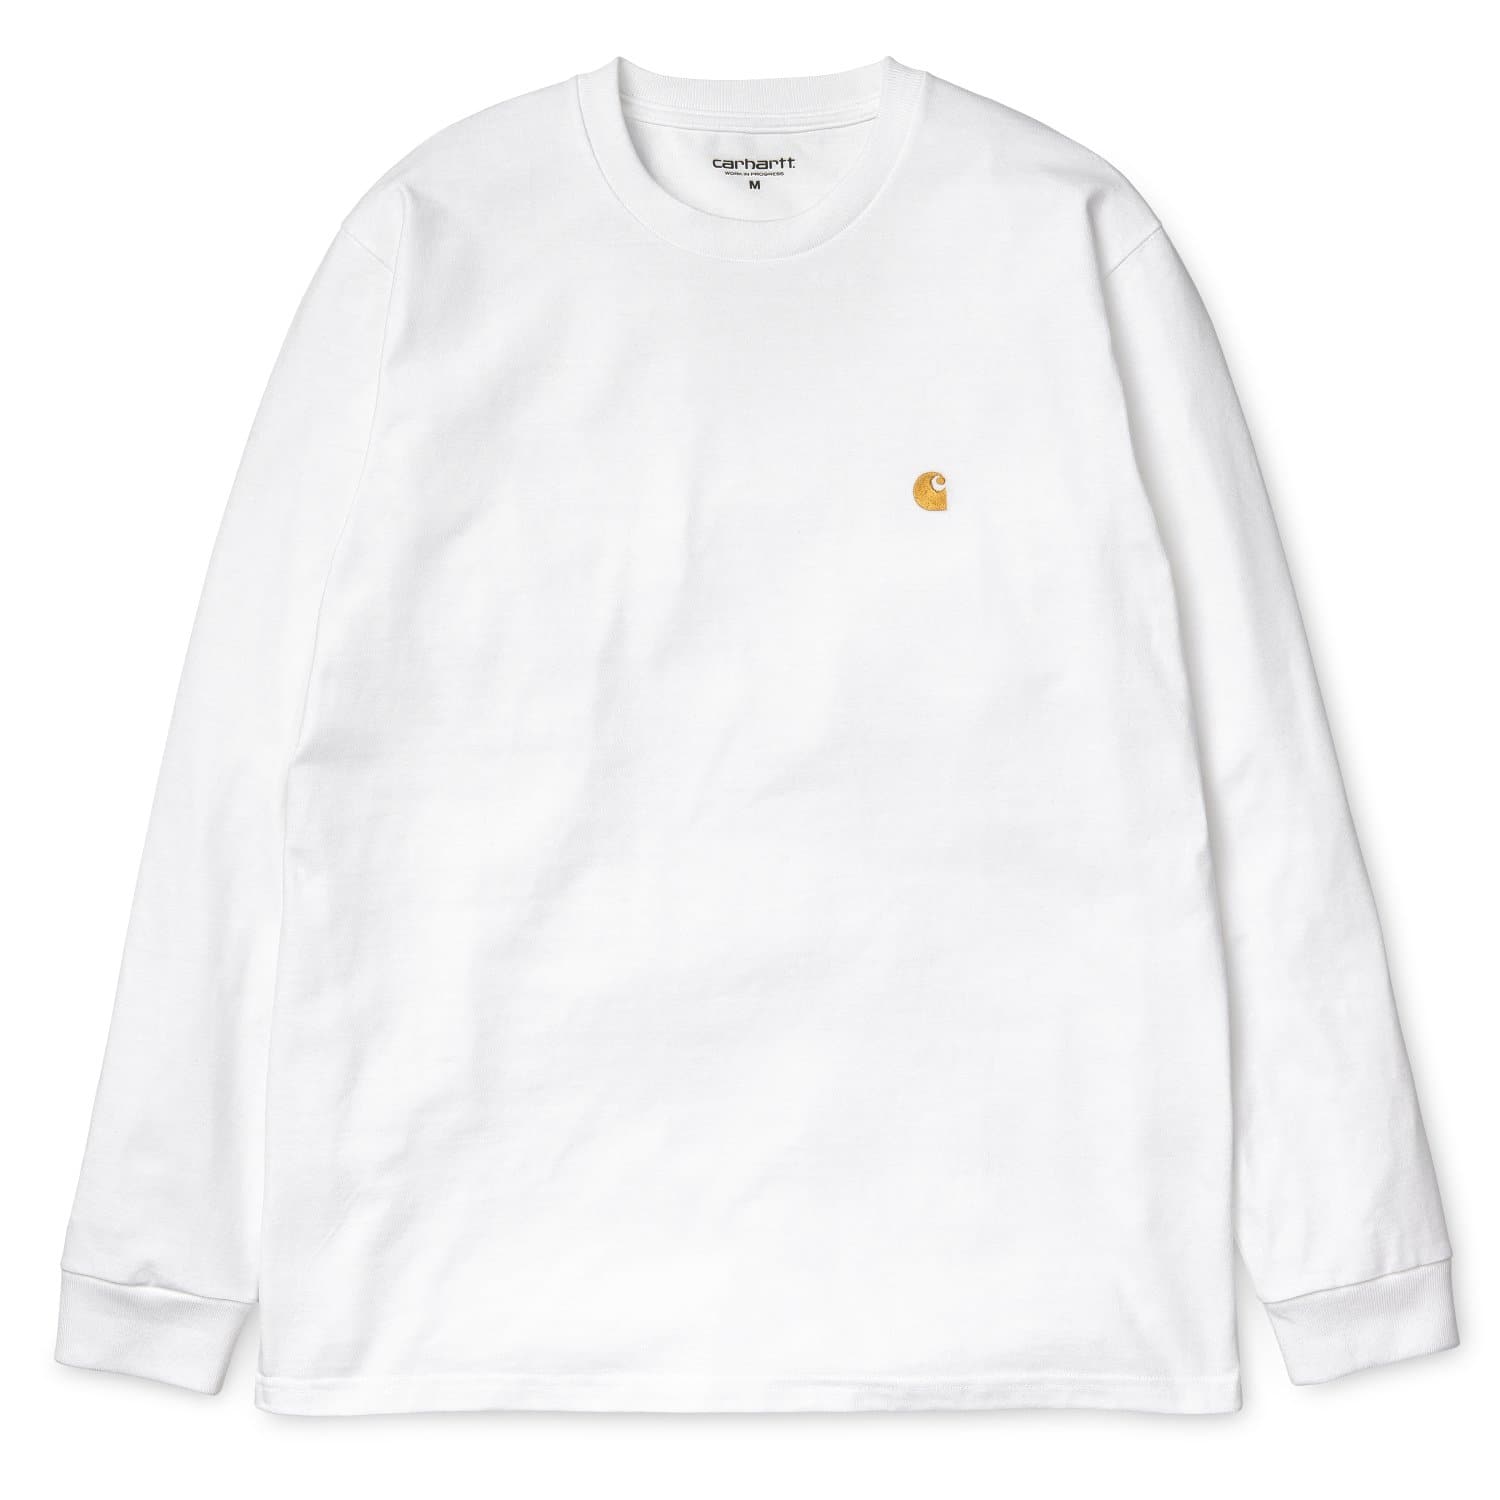 Carhartt Chase Longsleeve T-Shirt White/Gold